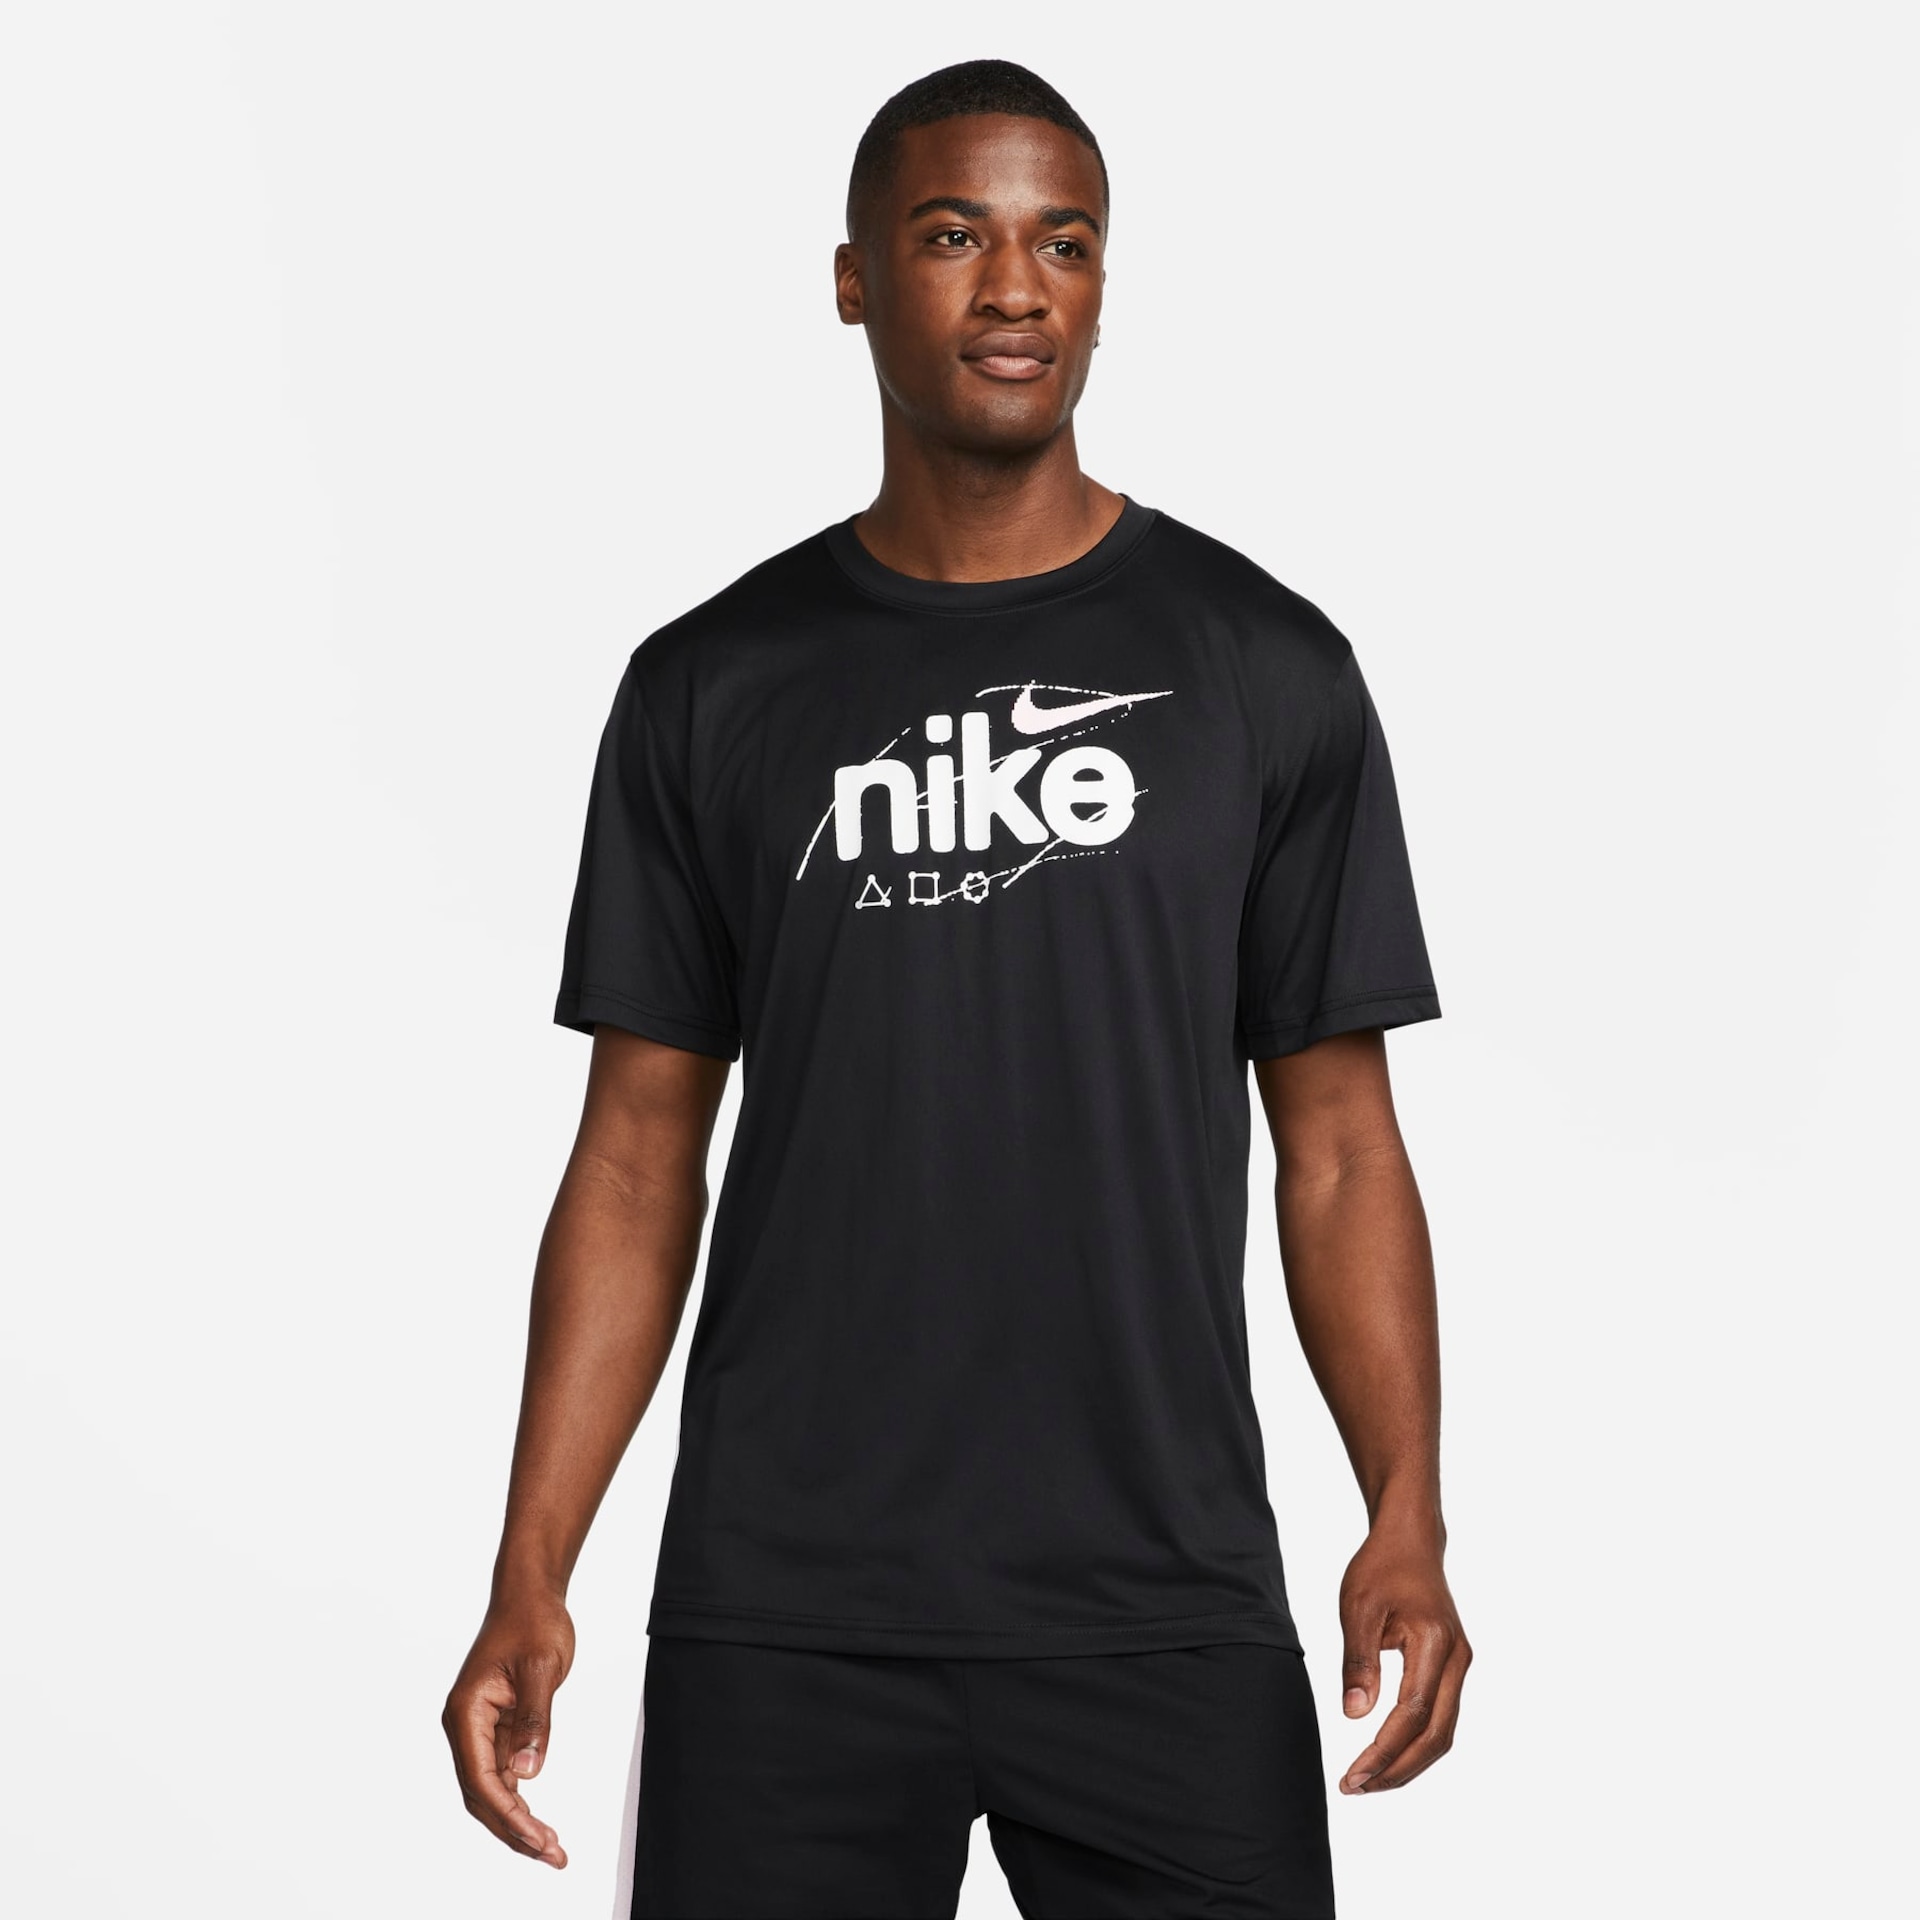 Ropas Masculina Nike - Conjuntos Para Homens - AliExpress